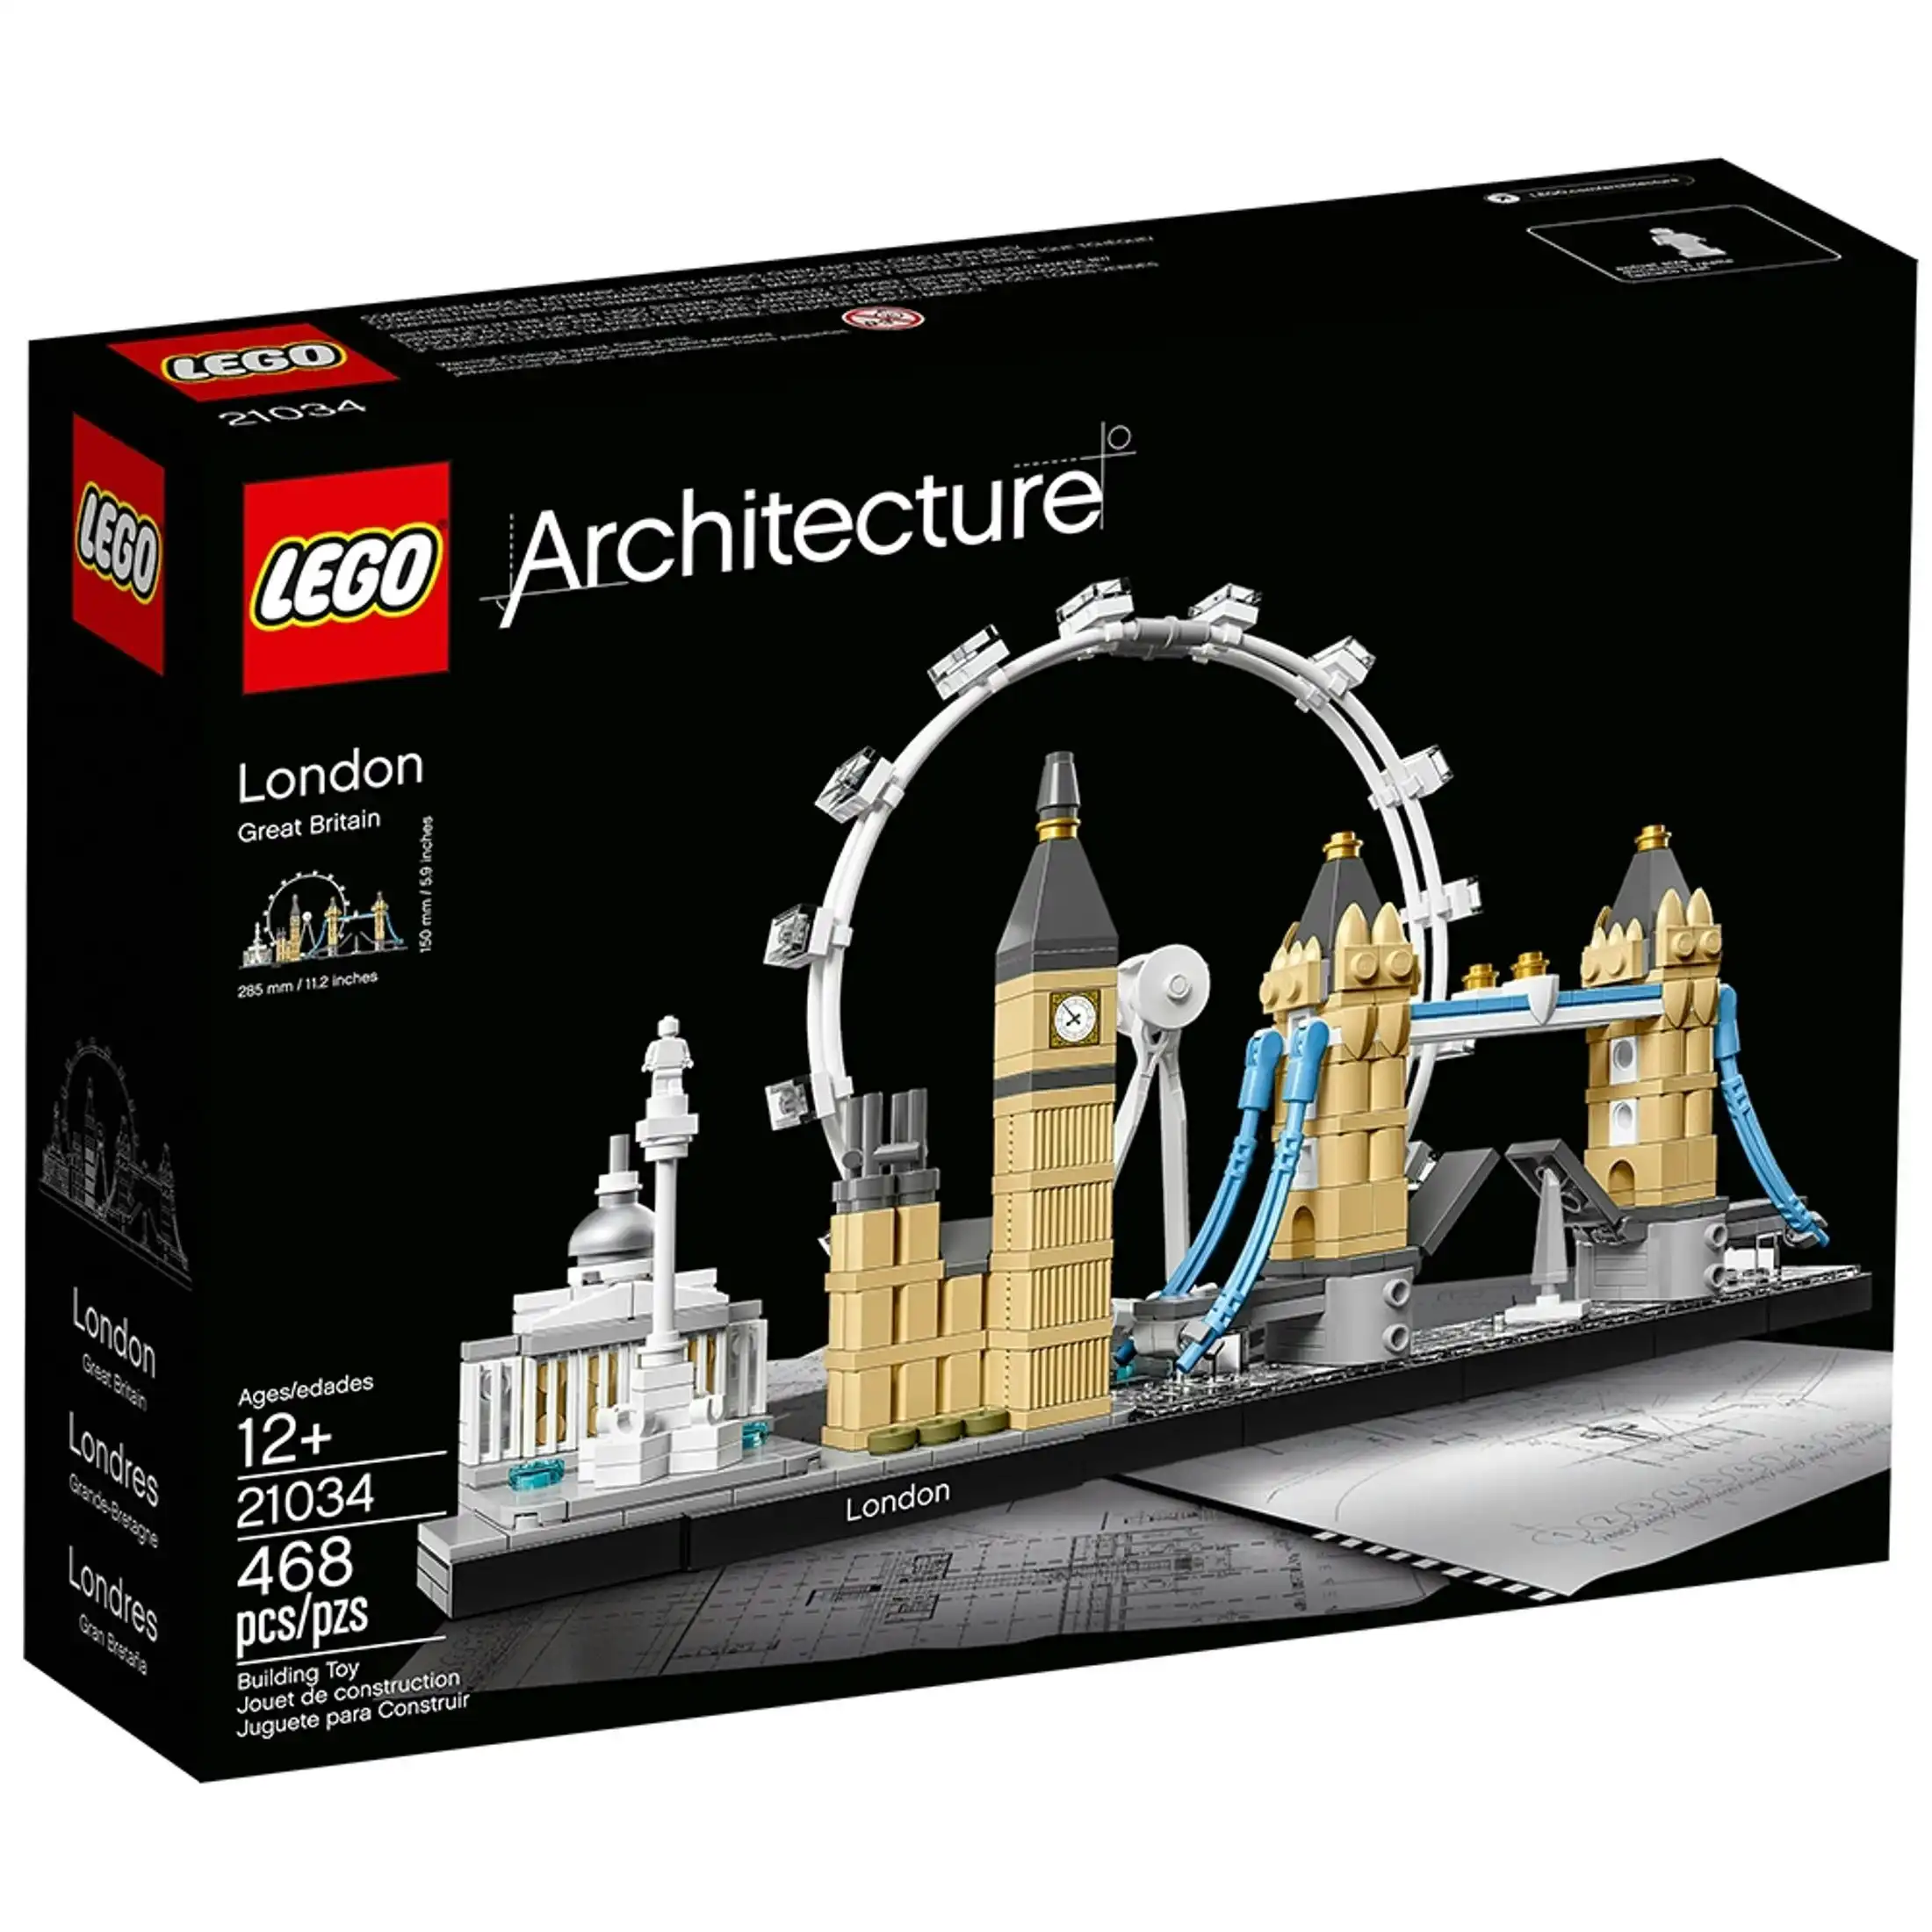 LEGO 21034 London - Architecture